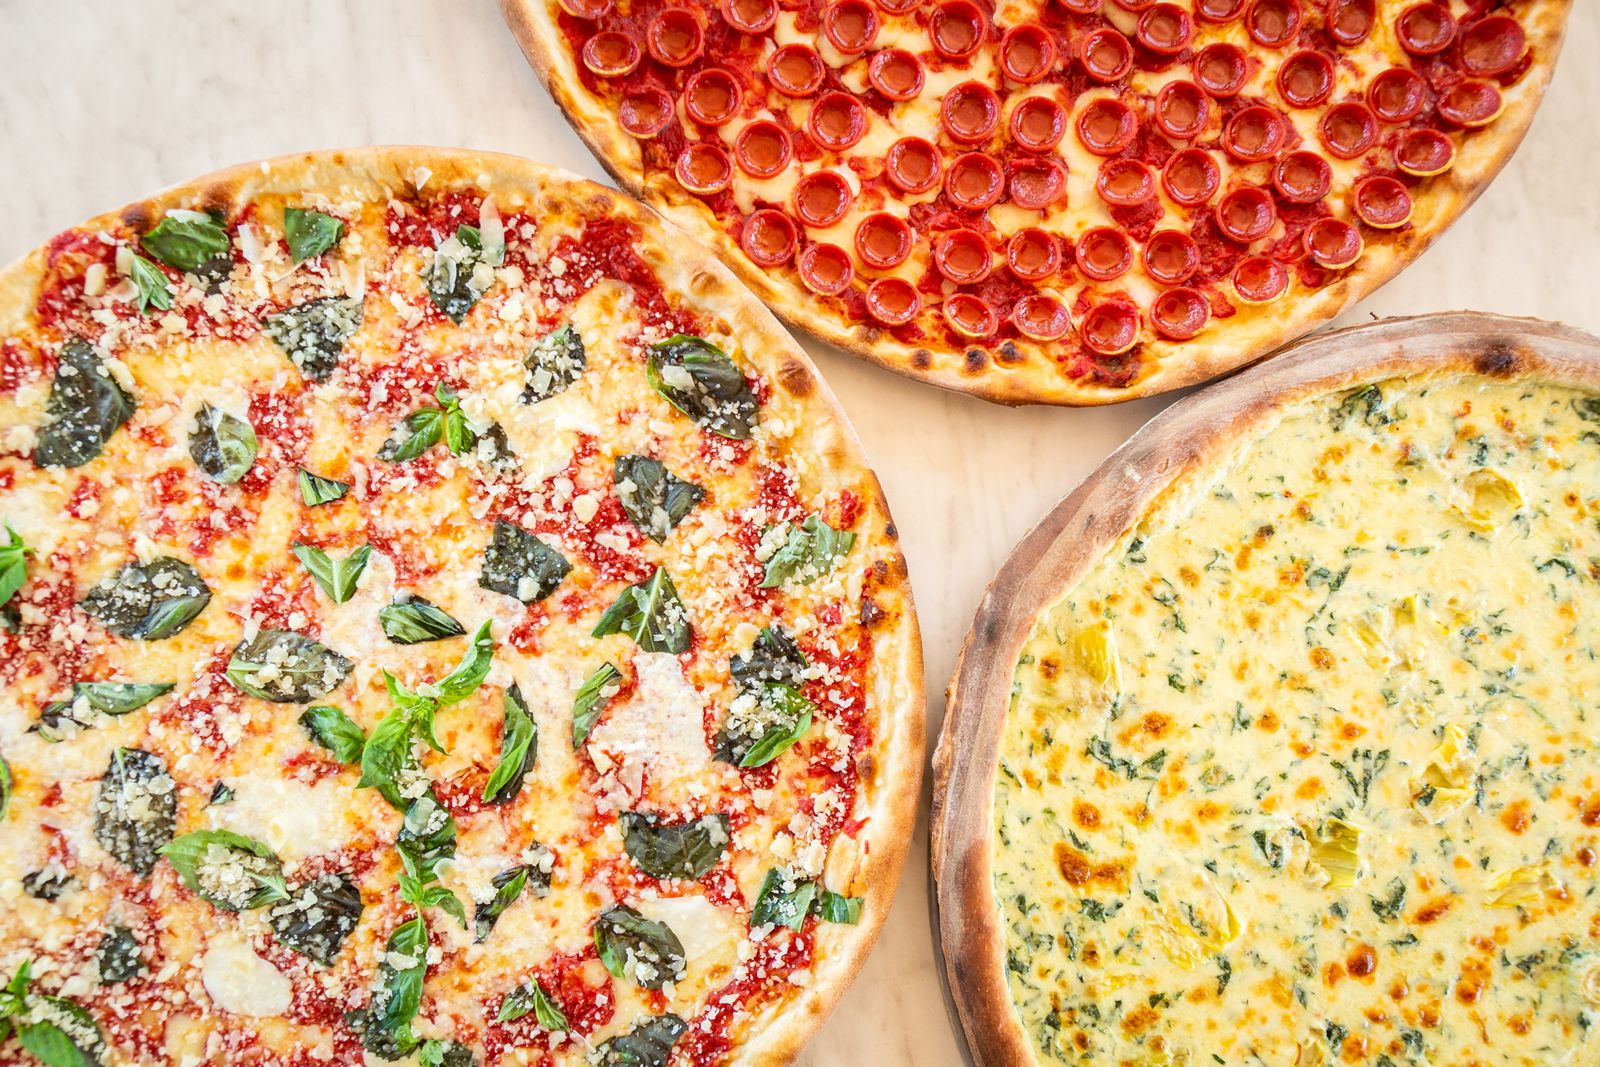 Artichoke Basille's Pizza Expands Arizona Footprint With Second Phoenix Location